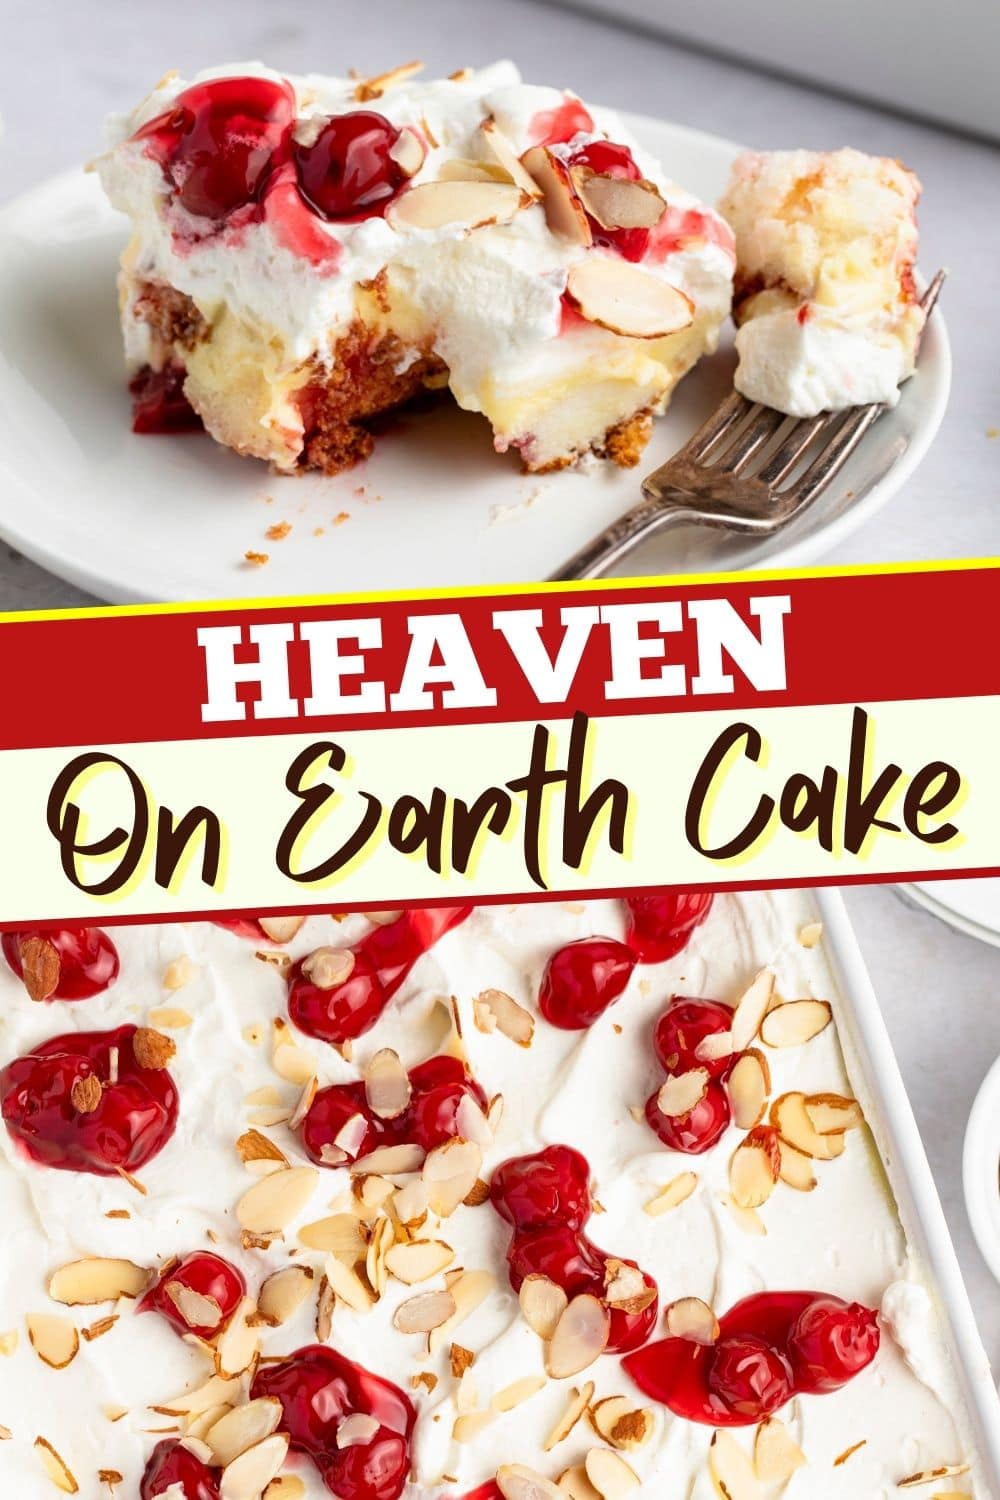 Heaven on Earth Cake